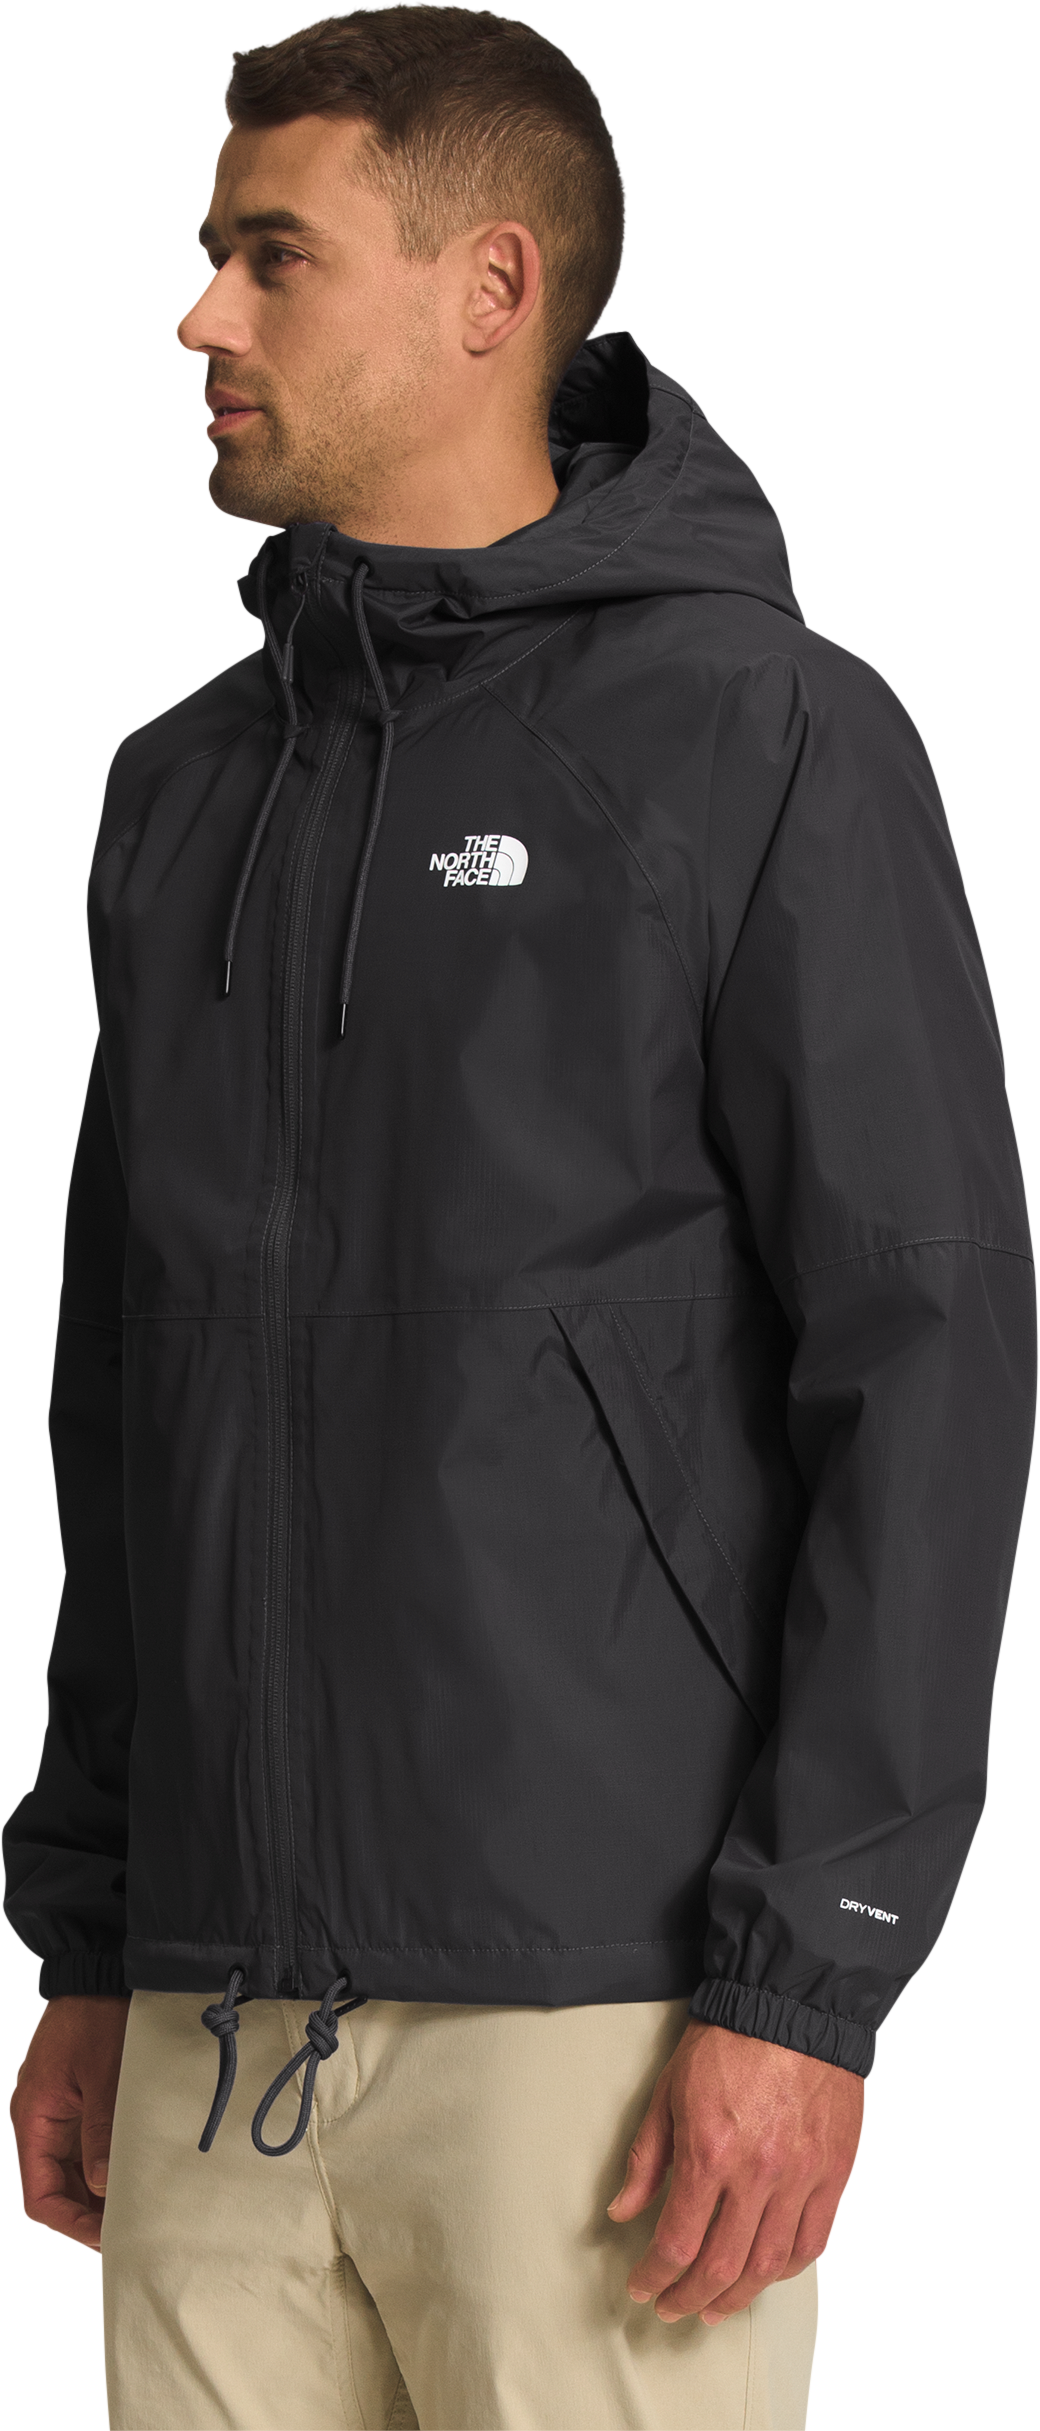 The North Face Antora Rain Full-Zip Long-Sleeve Hoodie for Men - TNF Black - S